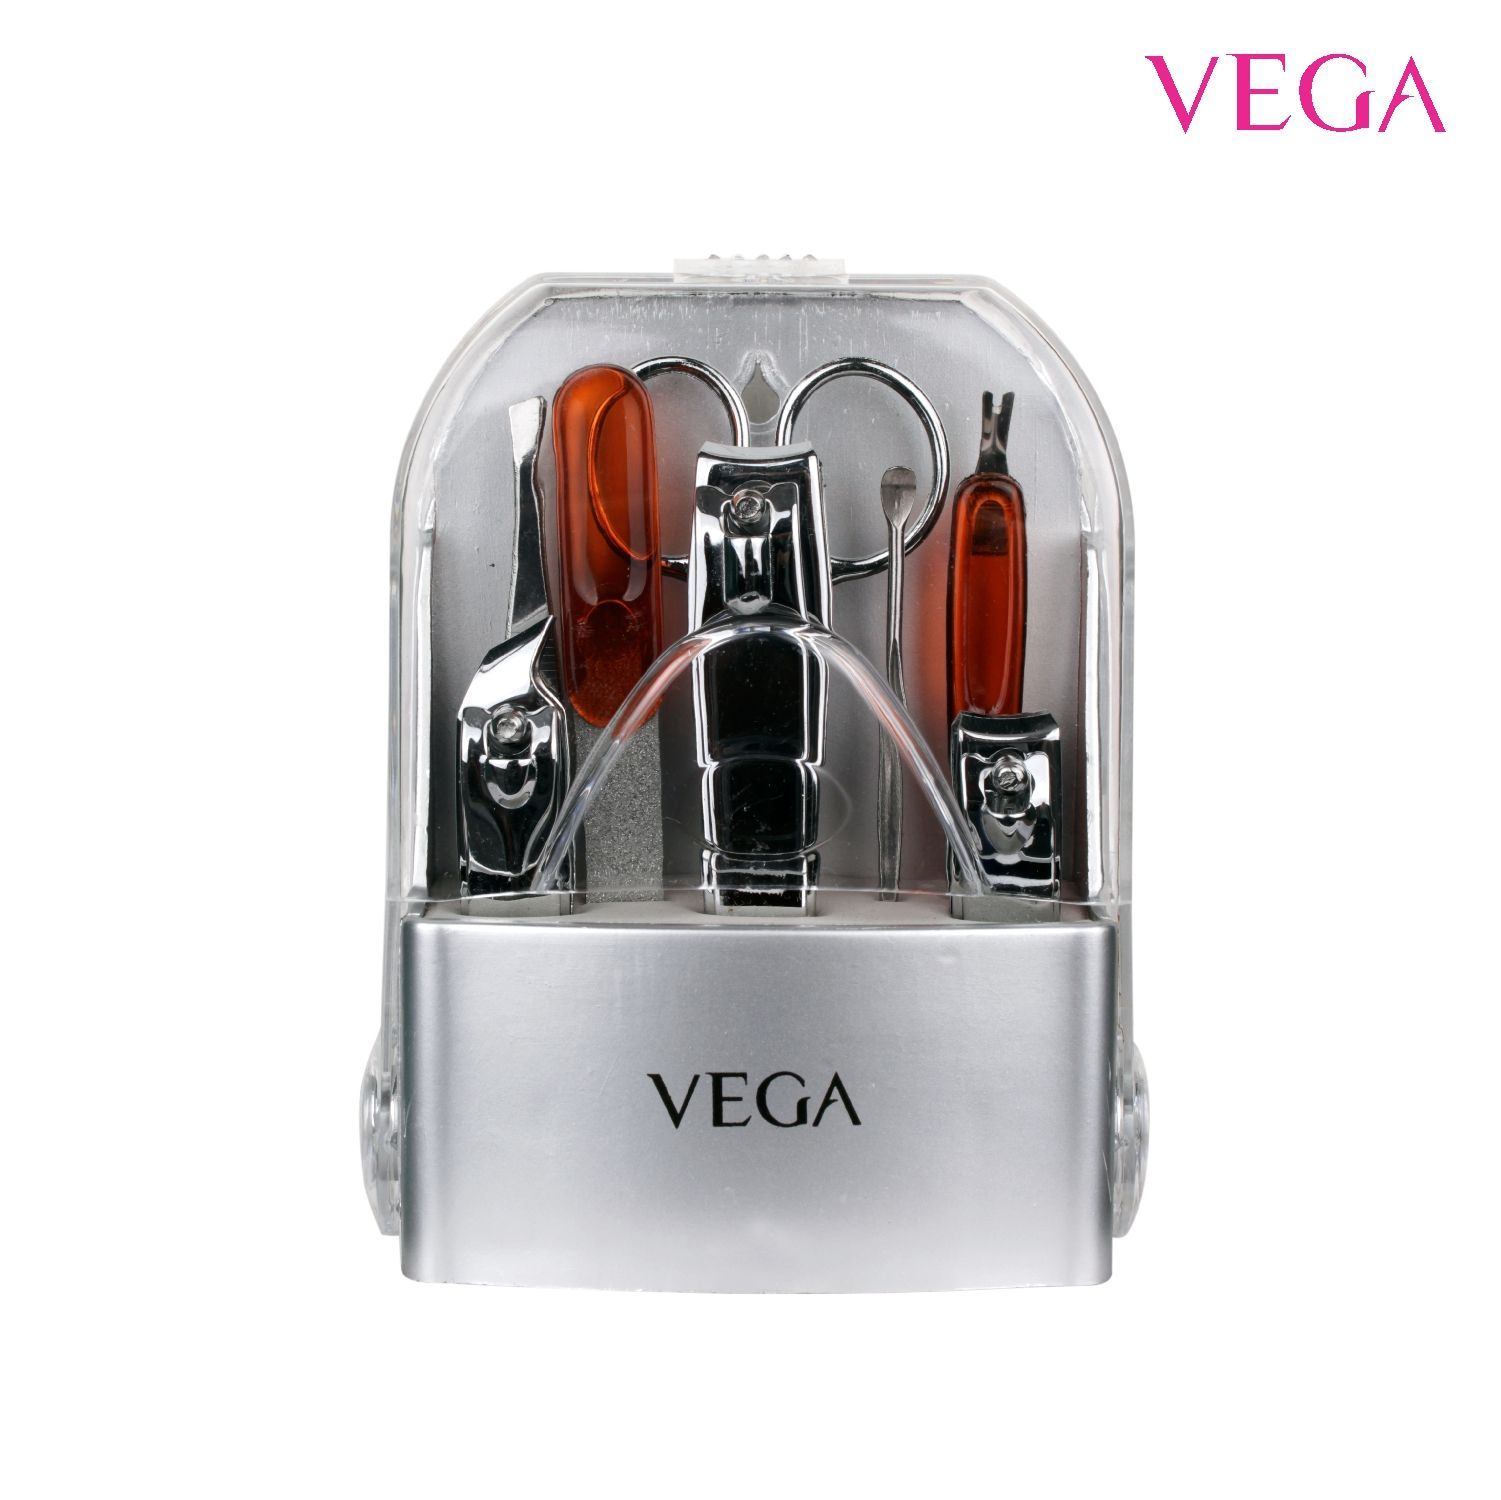 VEGA Manicure Set (Colour May Vary) (MS-08)